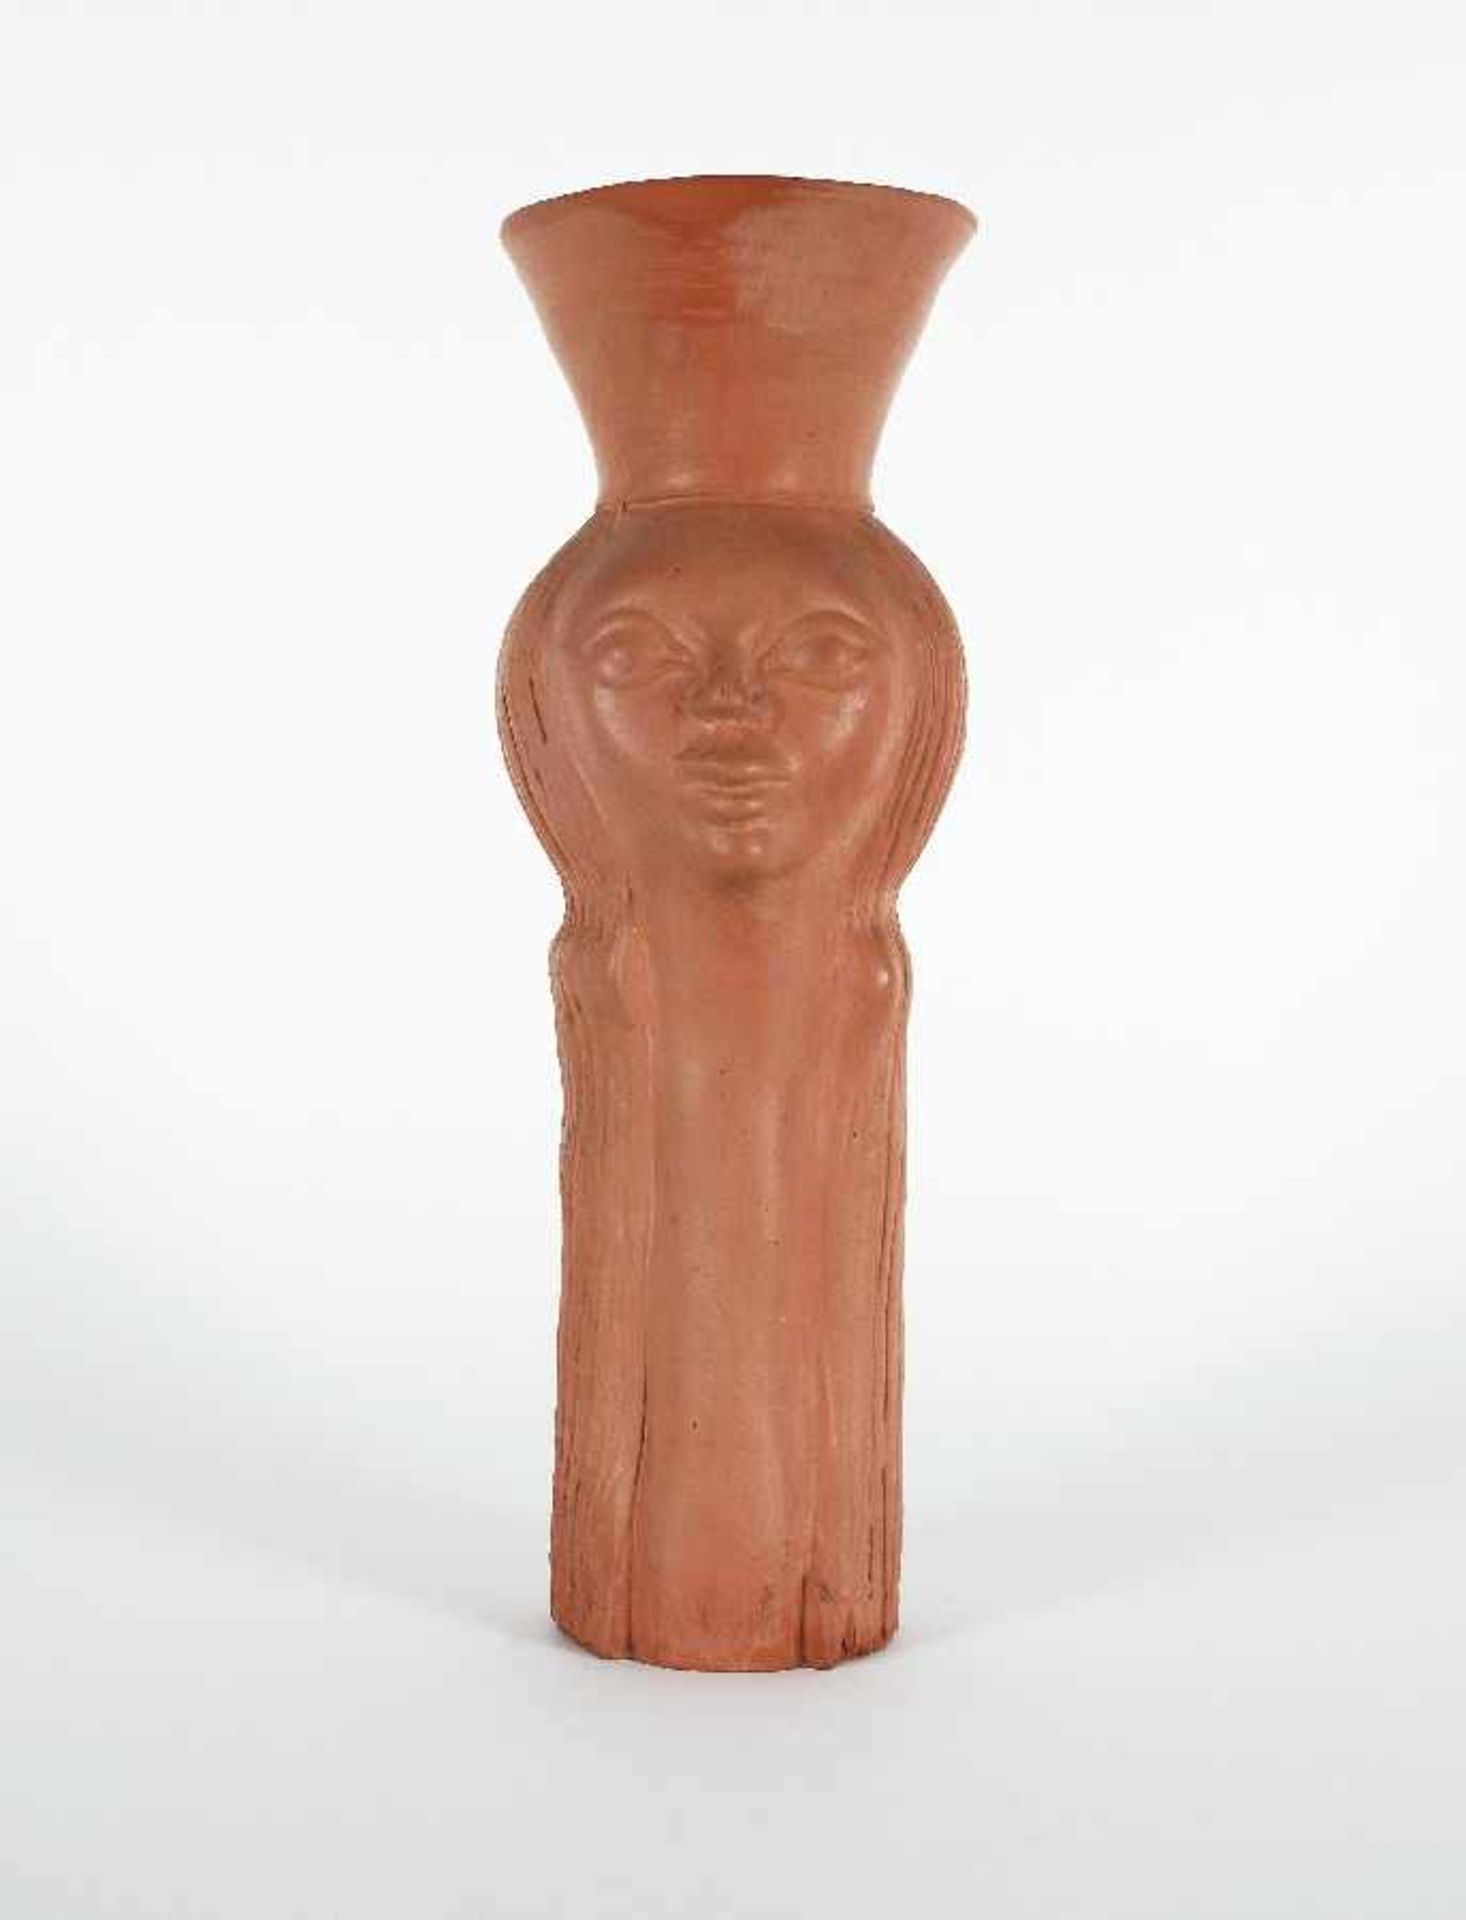 Jean Marais1913 - 1998Tete de femme (Vase)Ceramic, glazed inside; H 35 cm; inscribed ''Jean